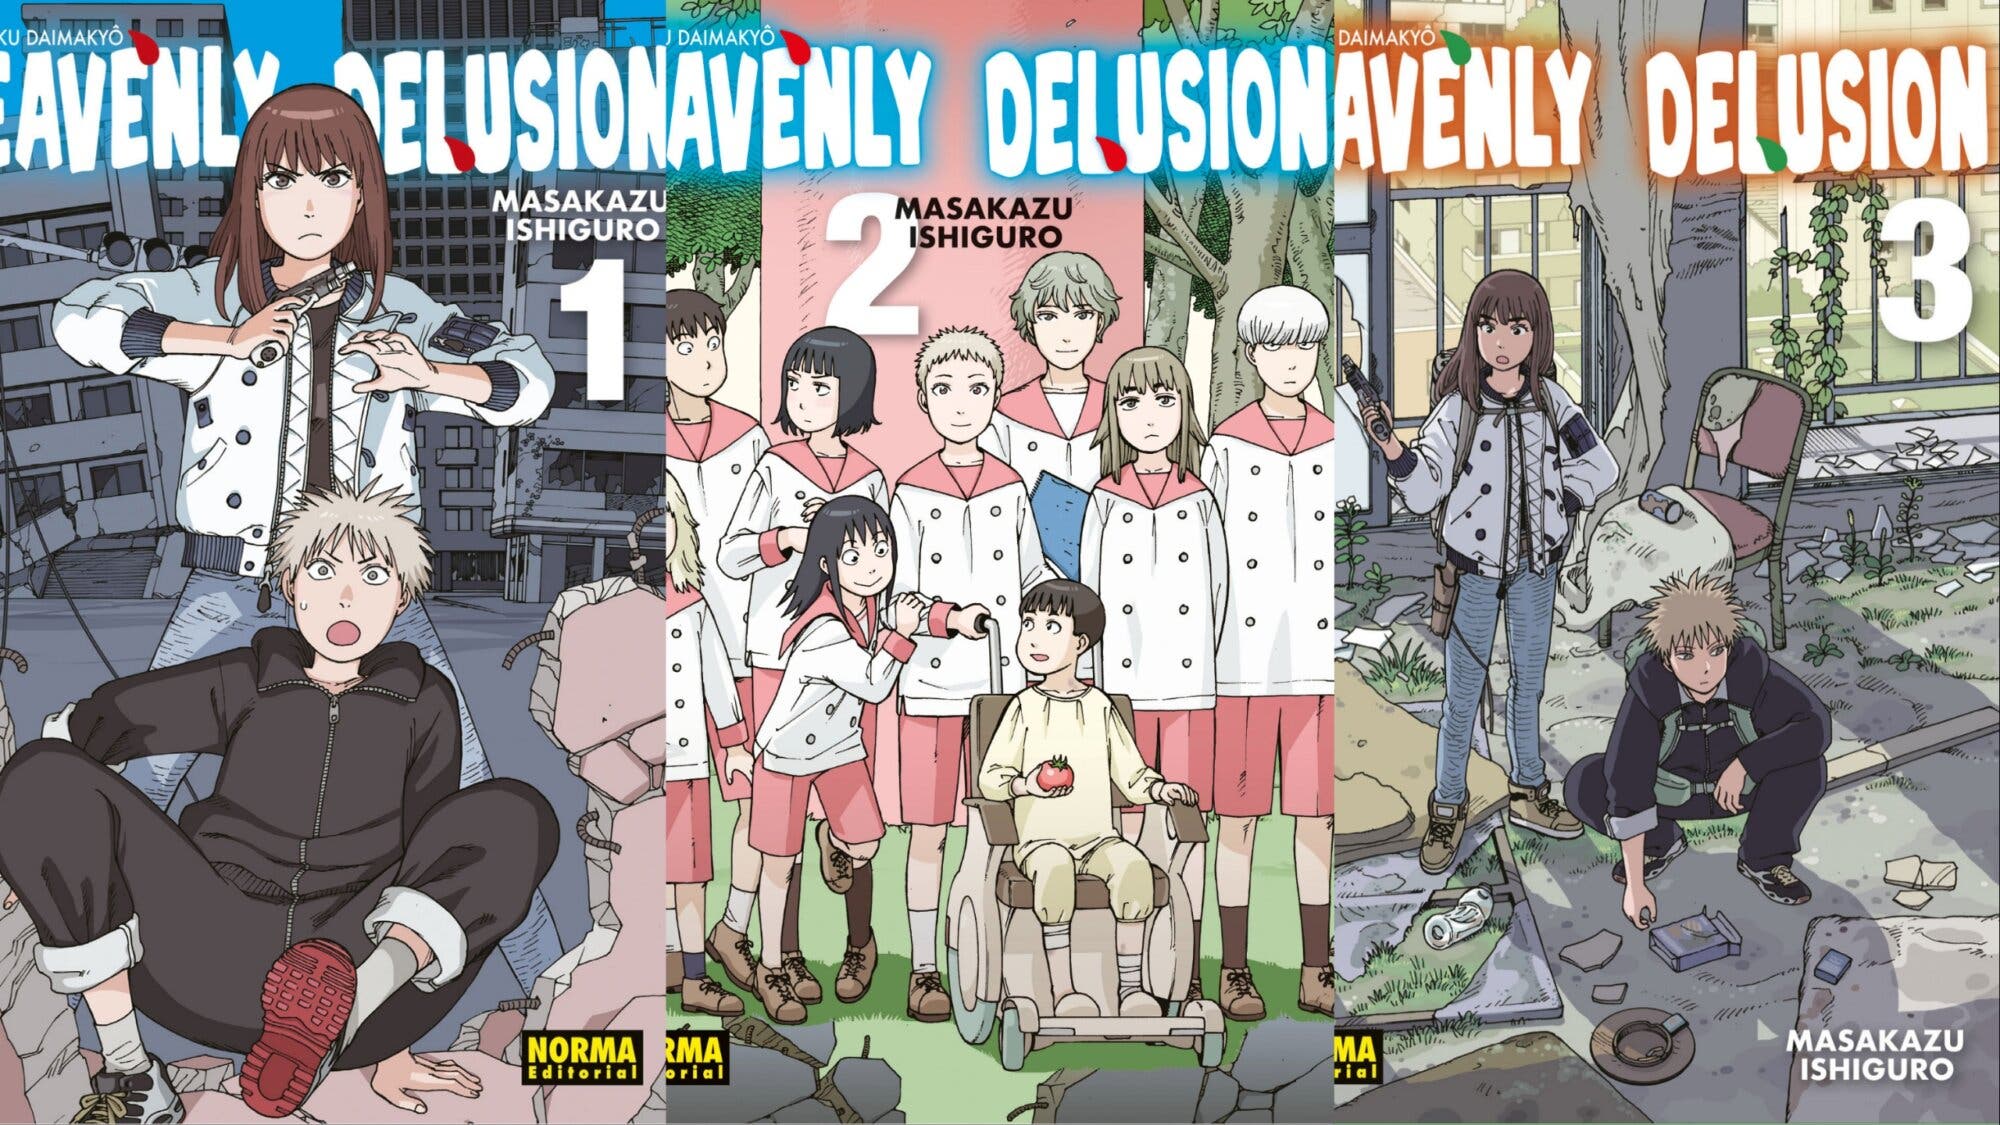 Heavenly Delusion: série do anime será distribuída pela Disney